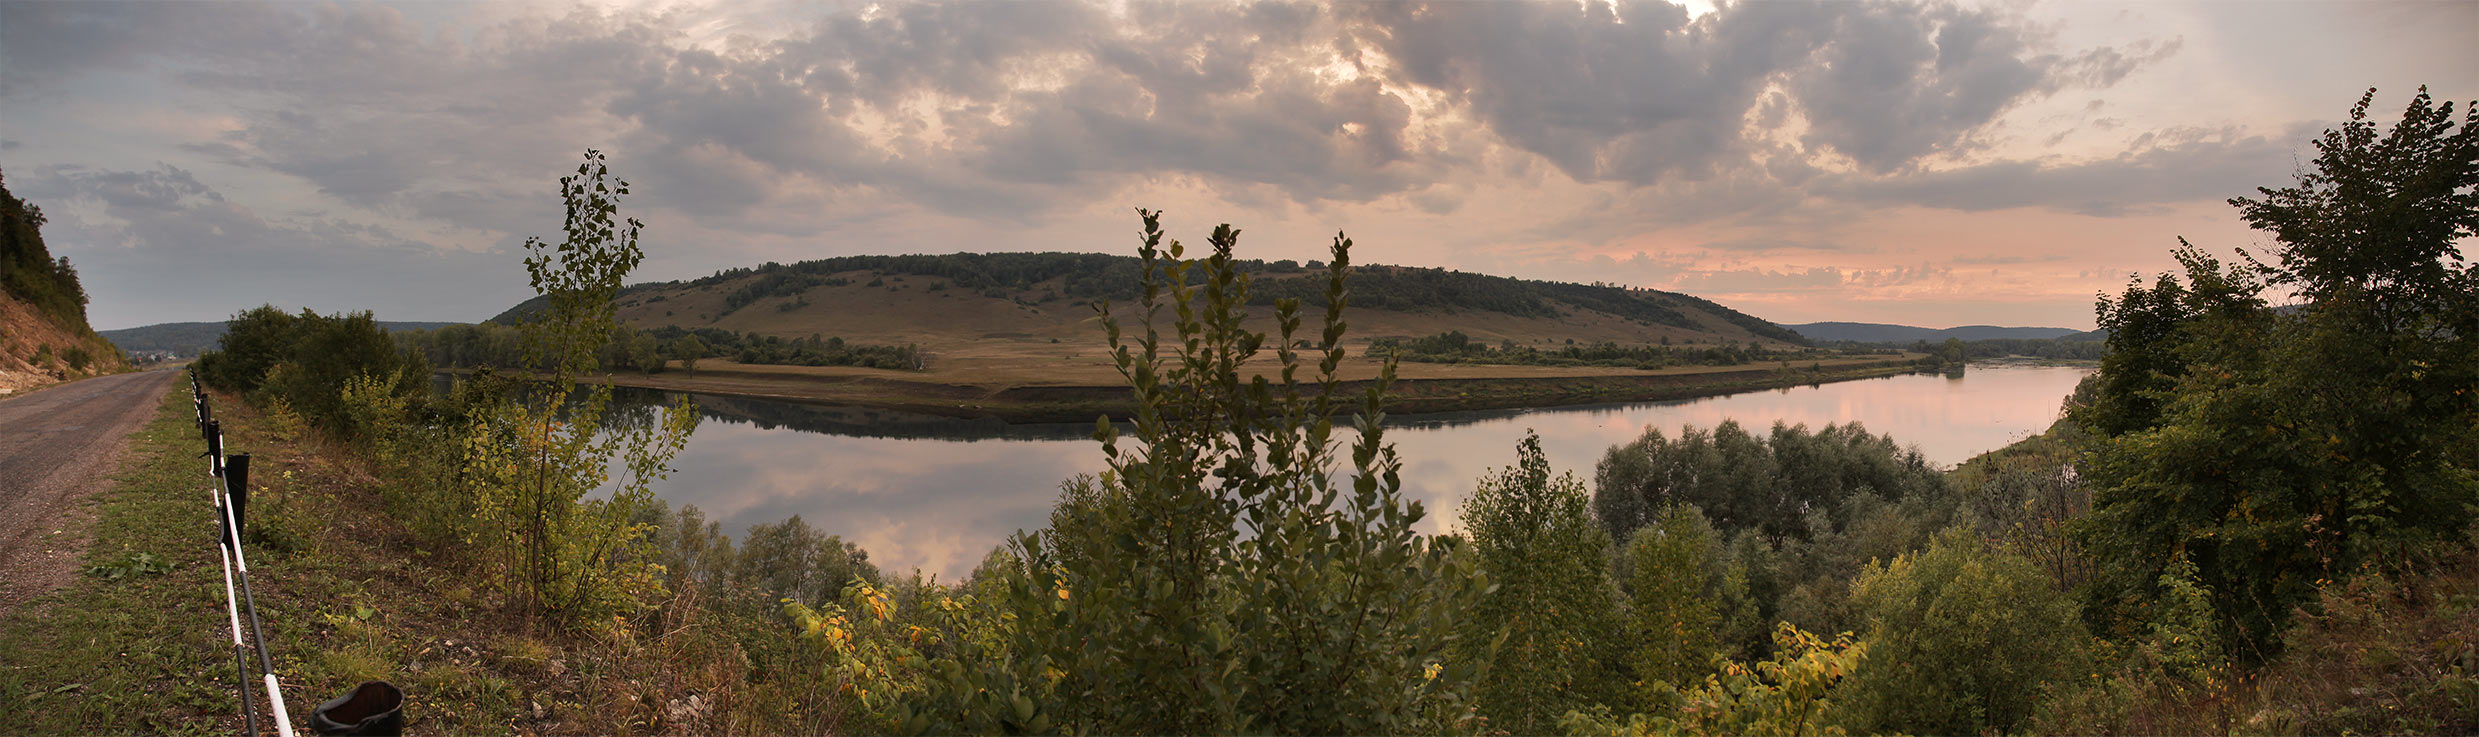 Река граница украины. Яшкина гора. Река Замошенка. Государственная граница на реке.